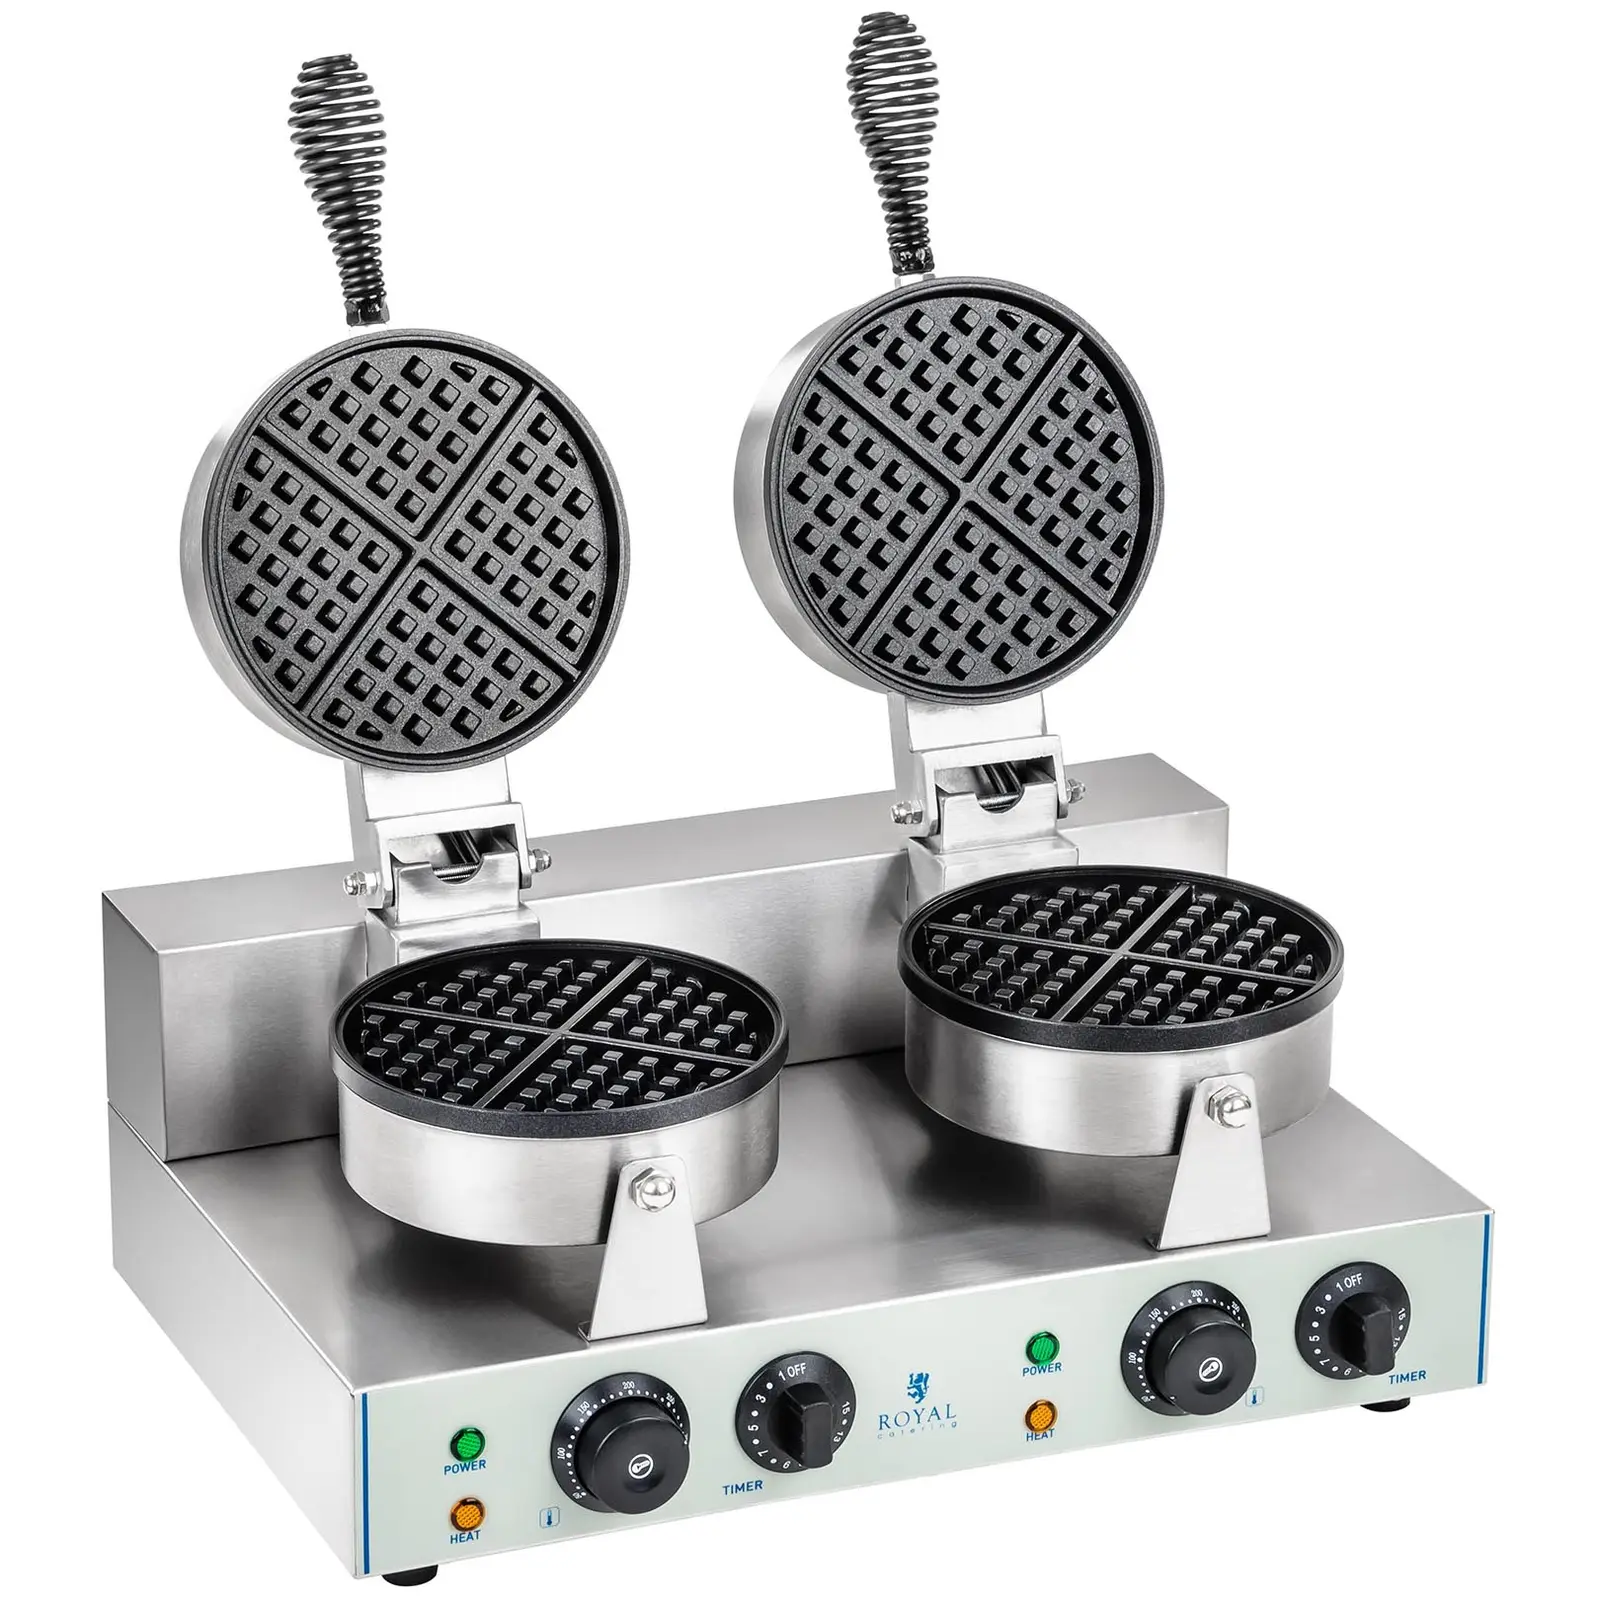 Máquina de Waffles - 2 x 1300 watts - redonda